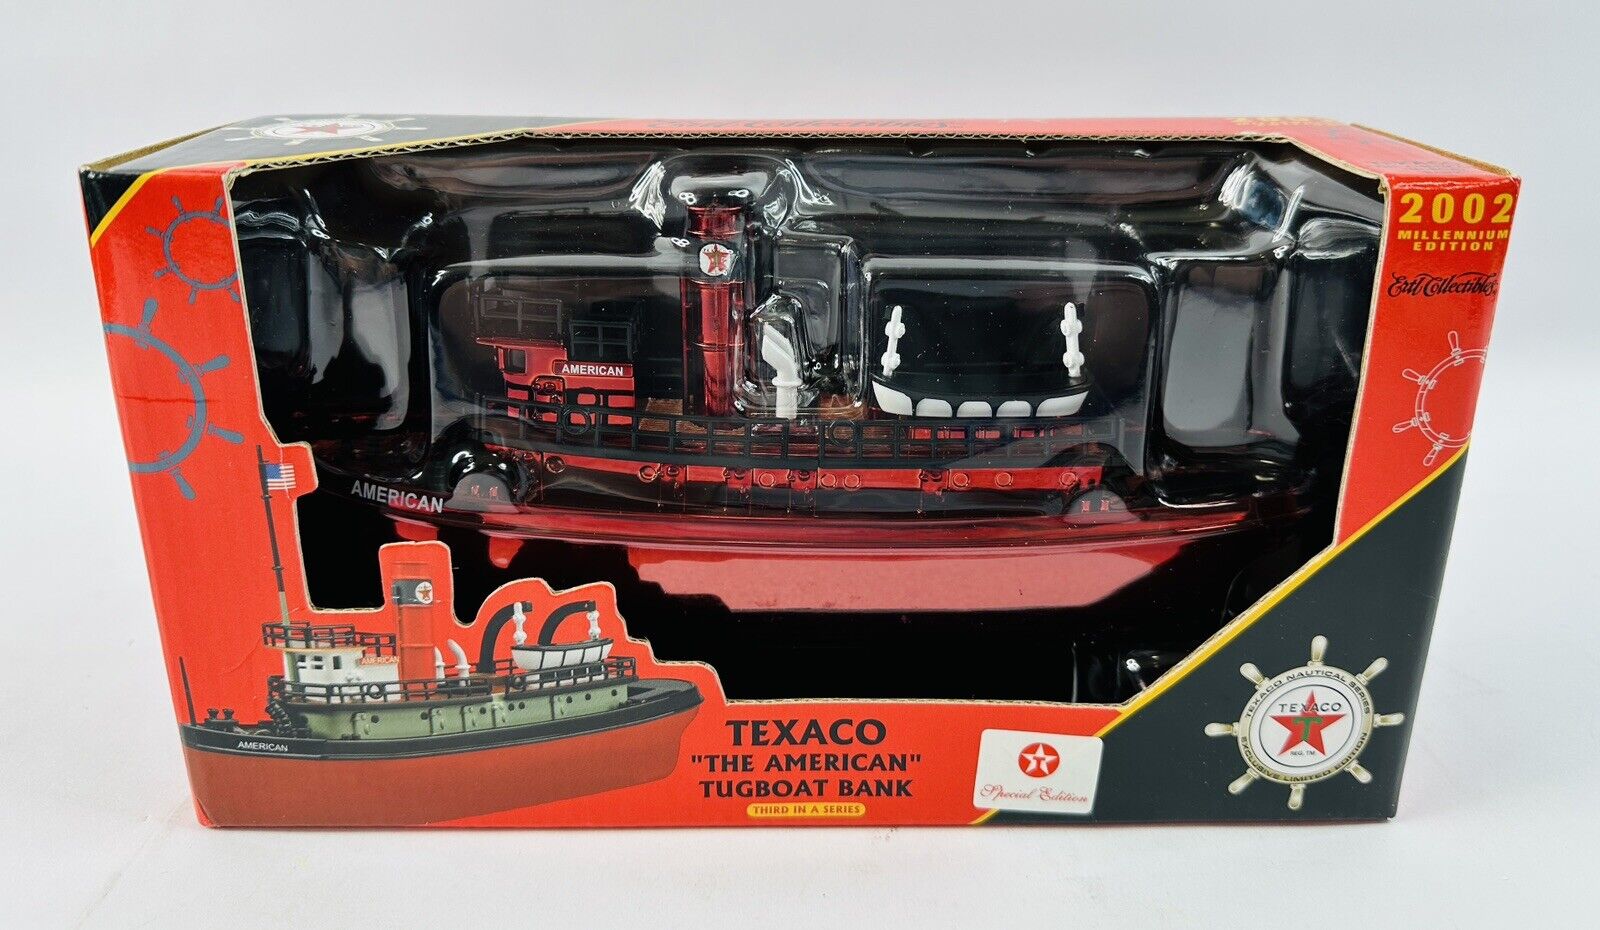 2002 Ertl Collectibles Texaco “The American” Tugboat Bank